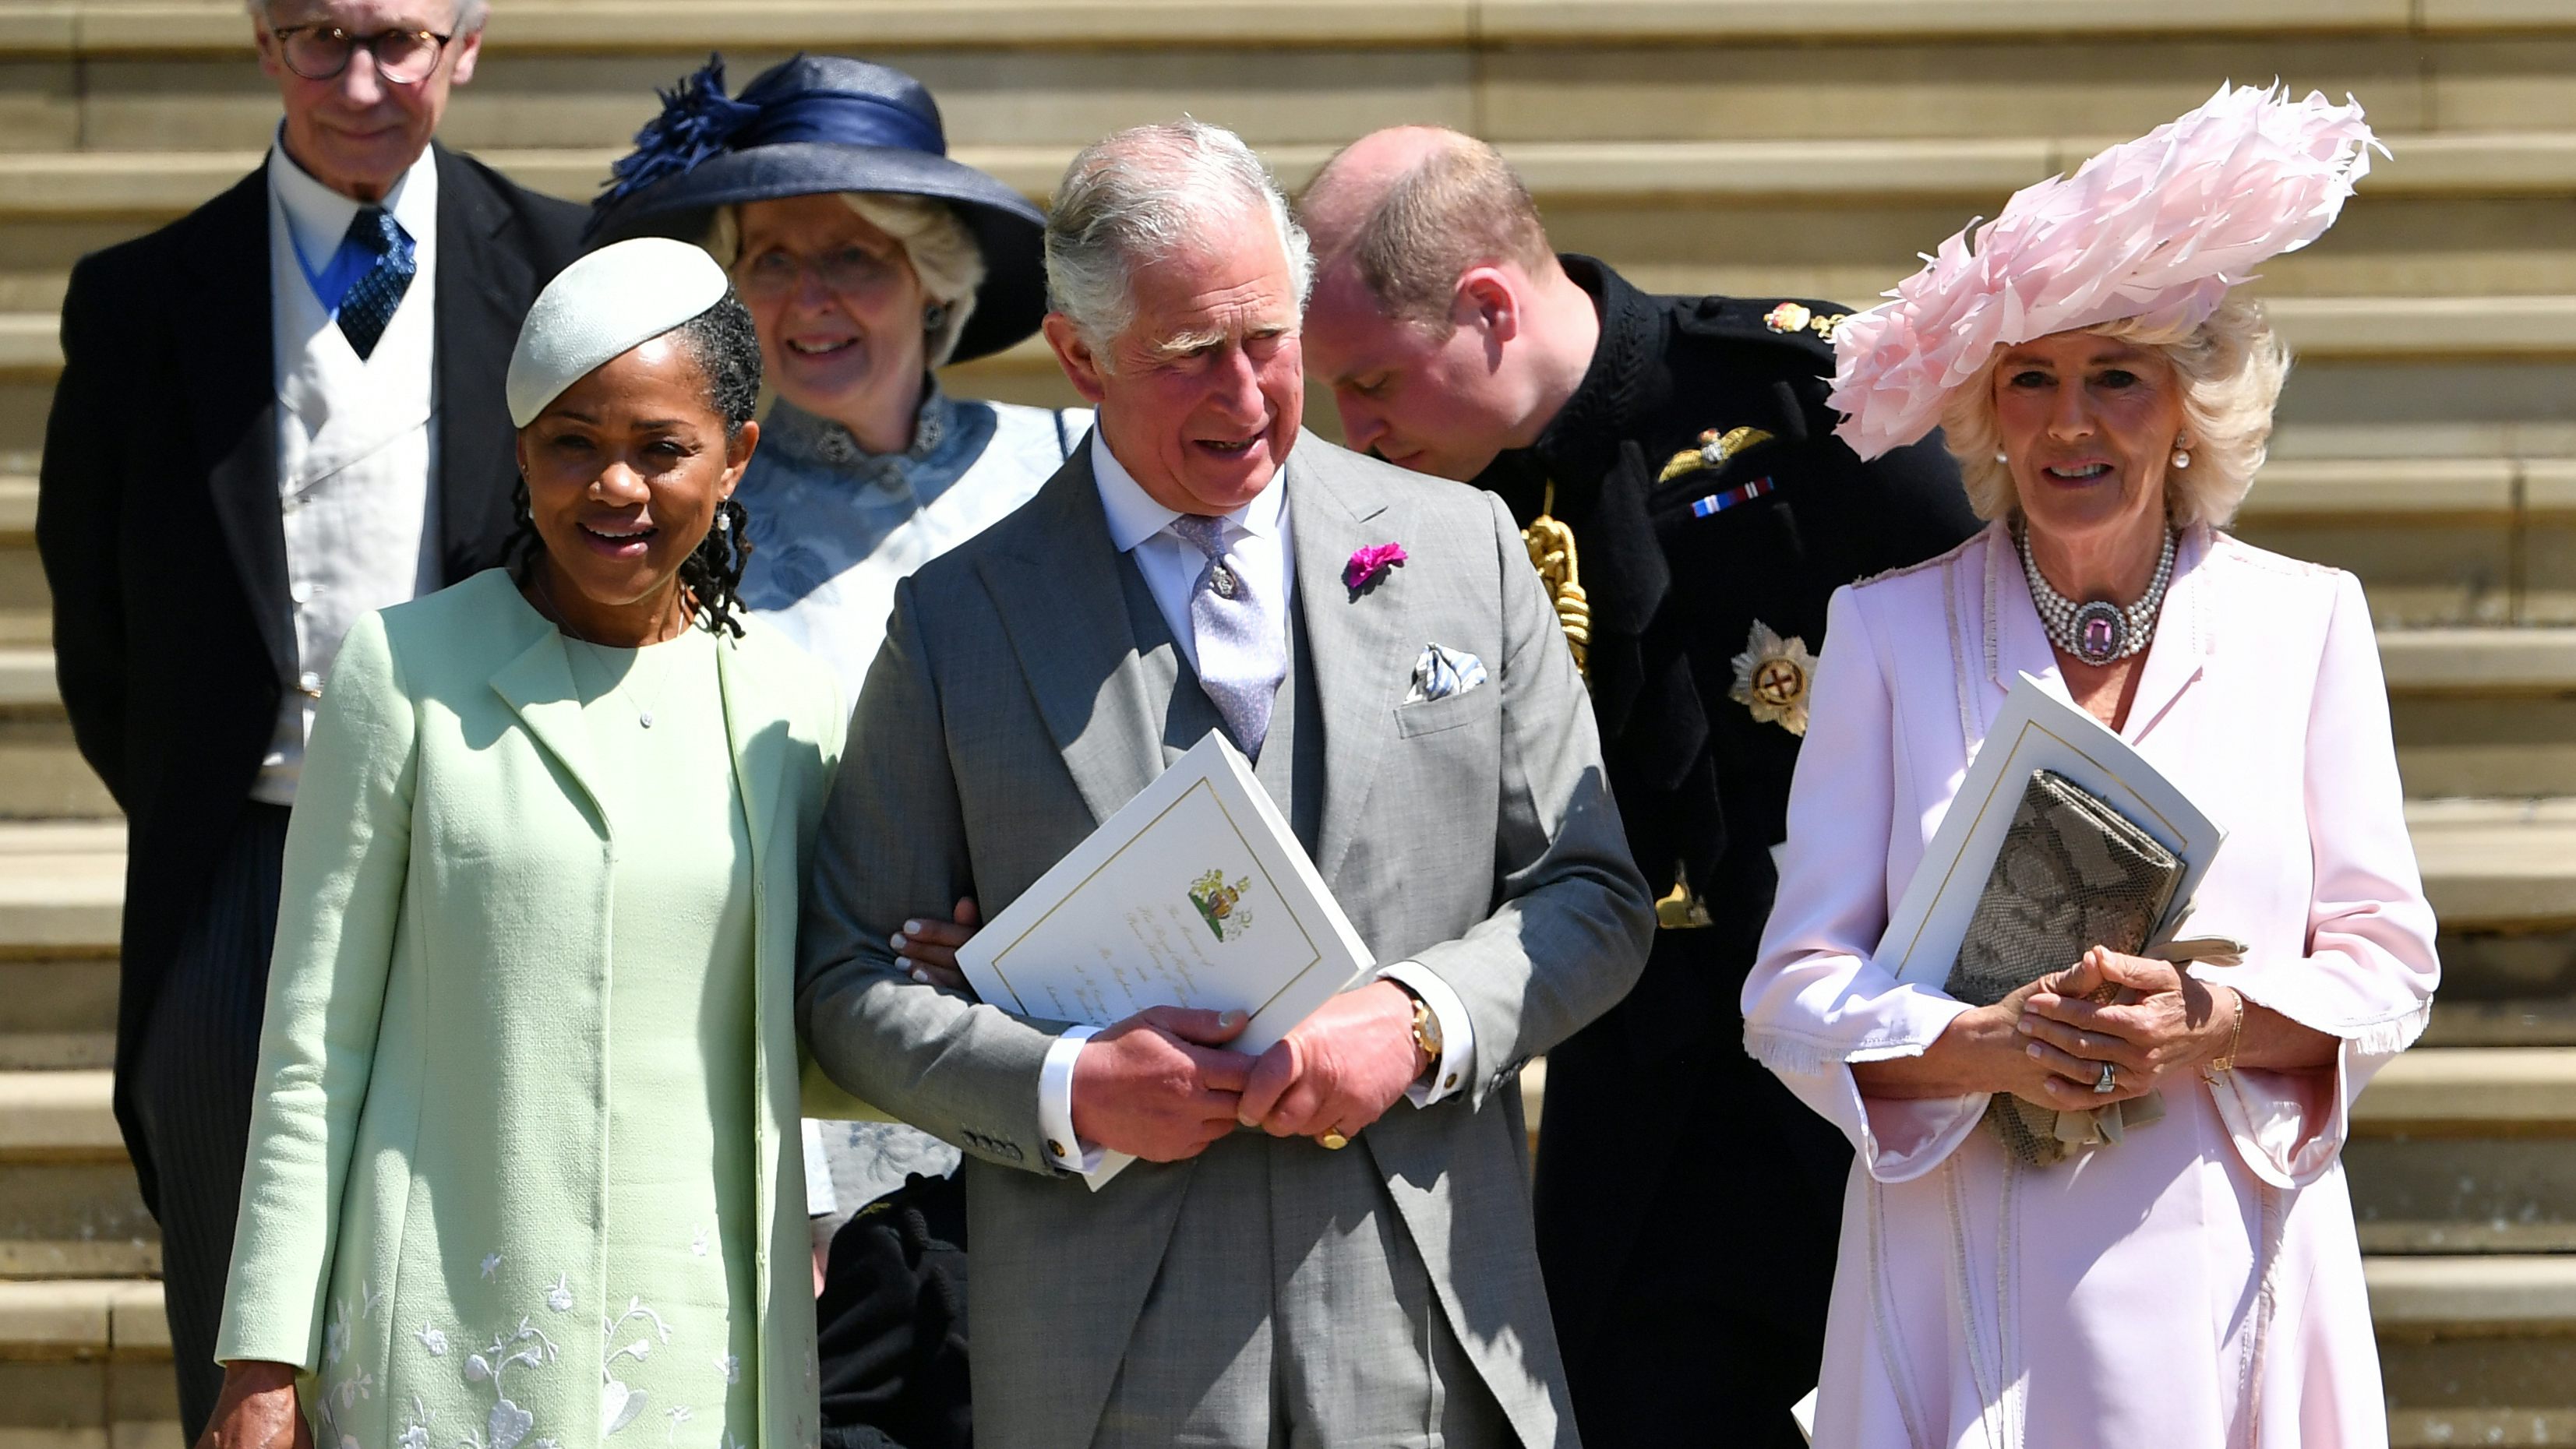 parmigiani - HRH Prince Charles wearing his Parmigiani Fleurier Toric at the Royal Wedding Charles_Hero.jpg?ixlib=rails-1.1